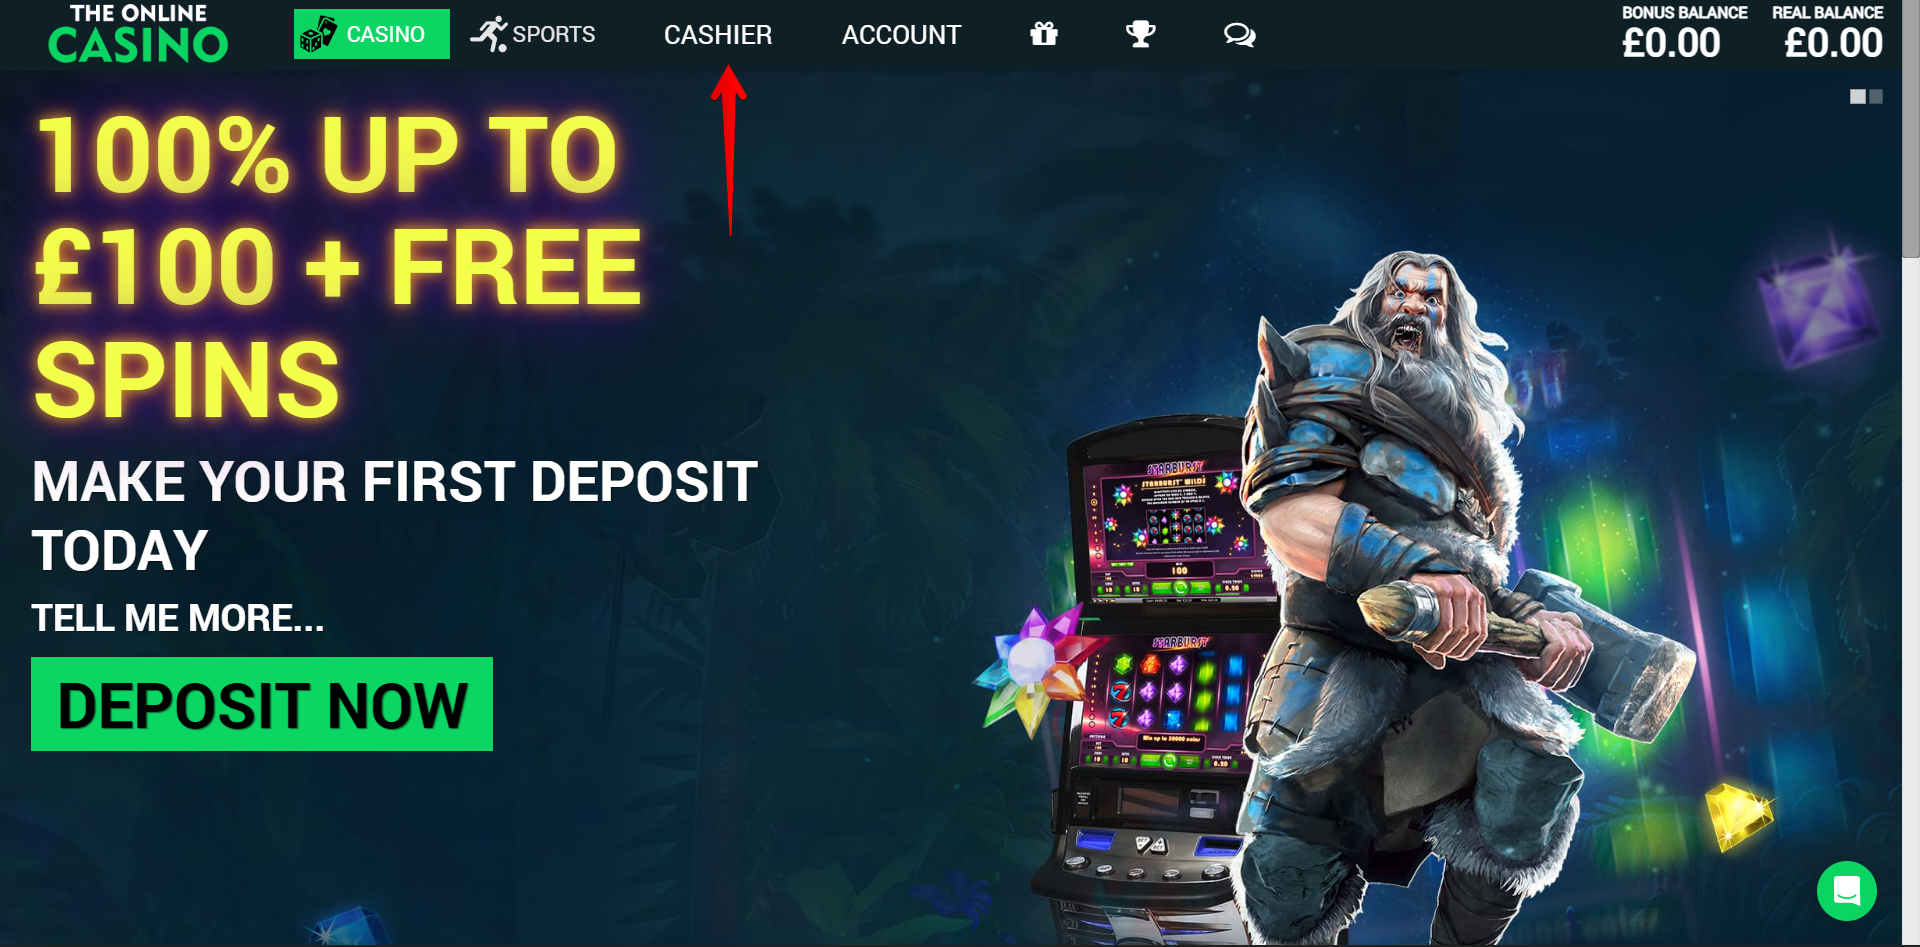 The Online Casino homepage